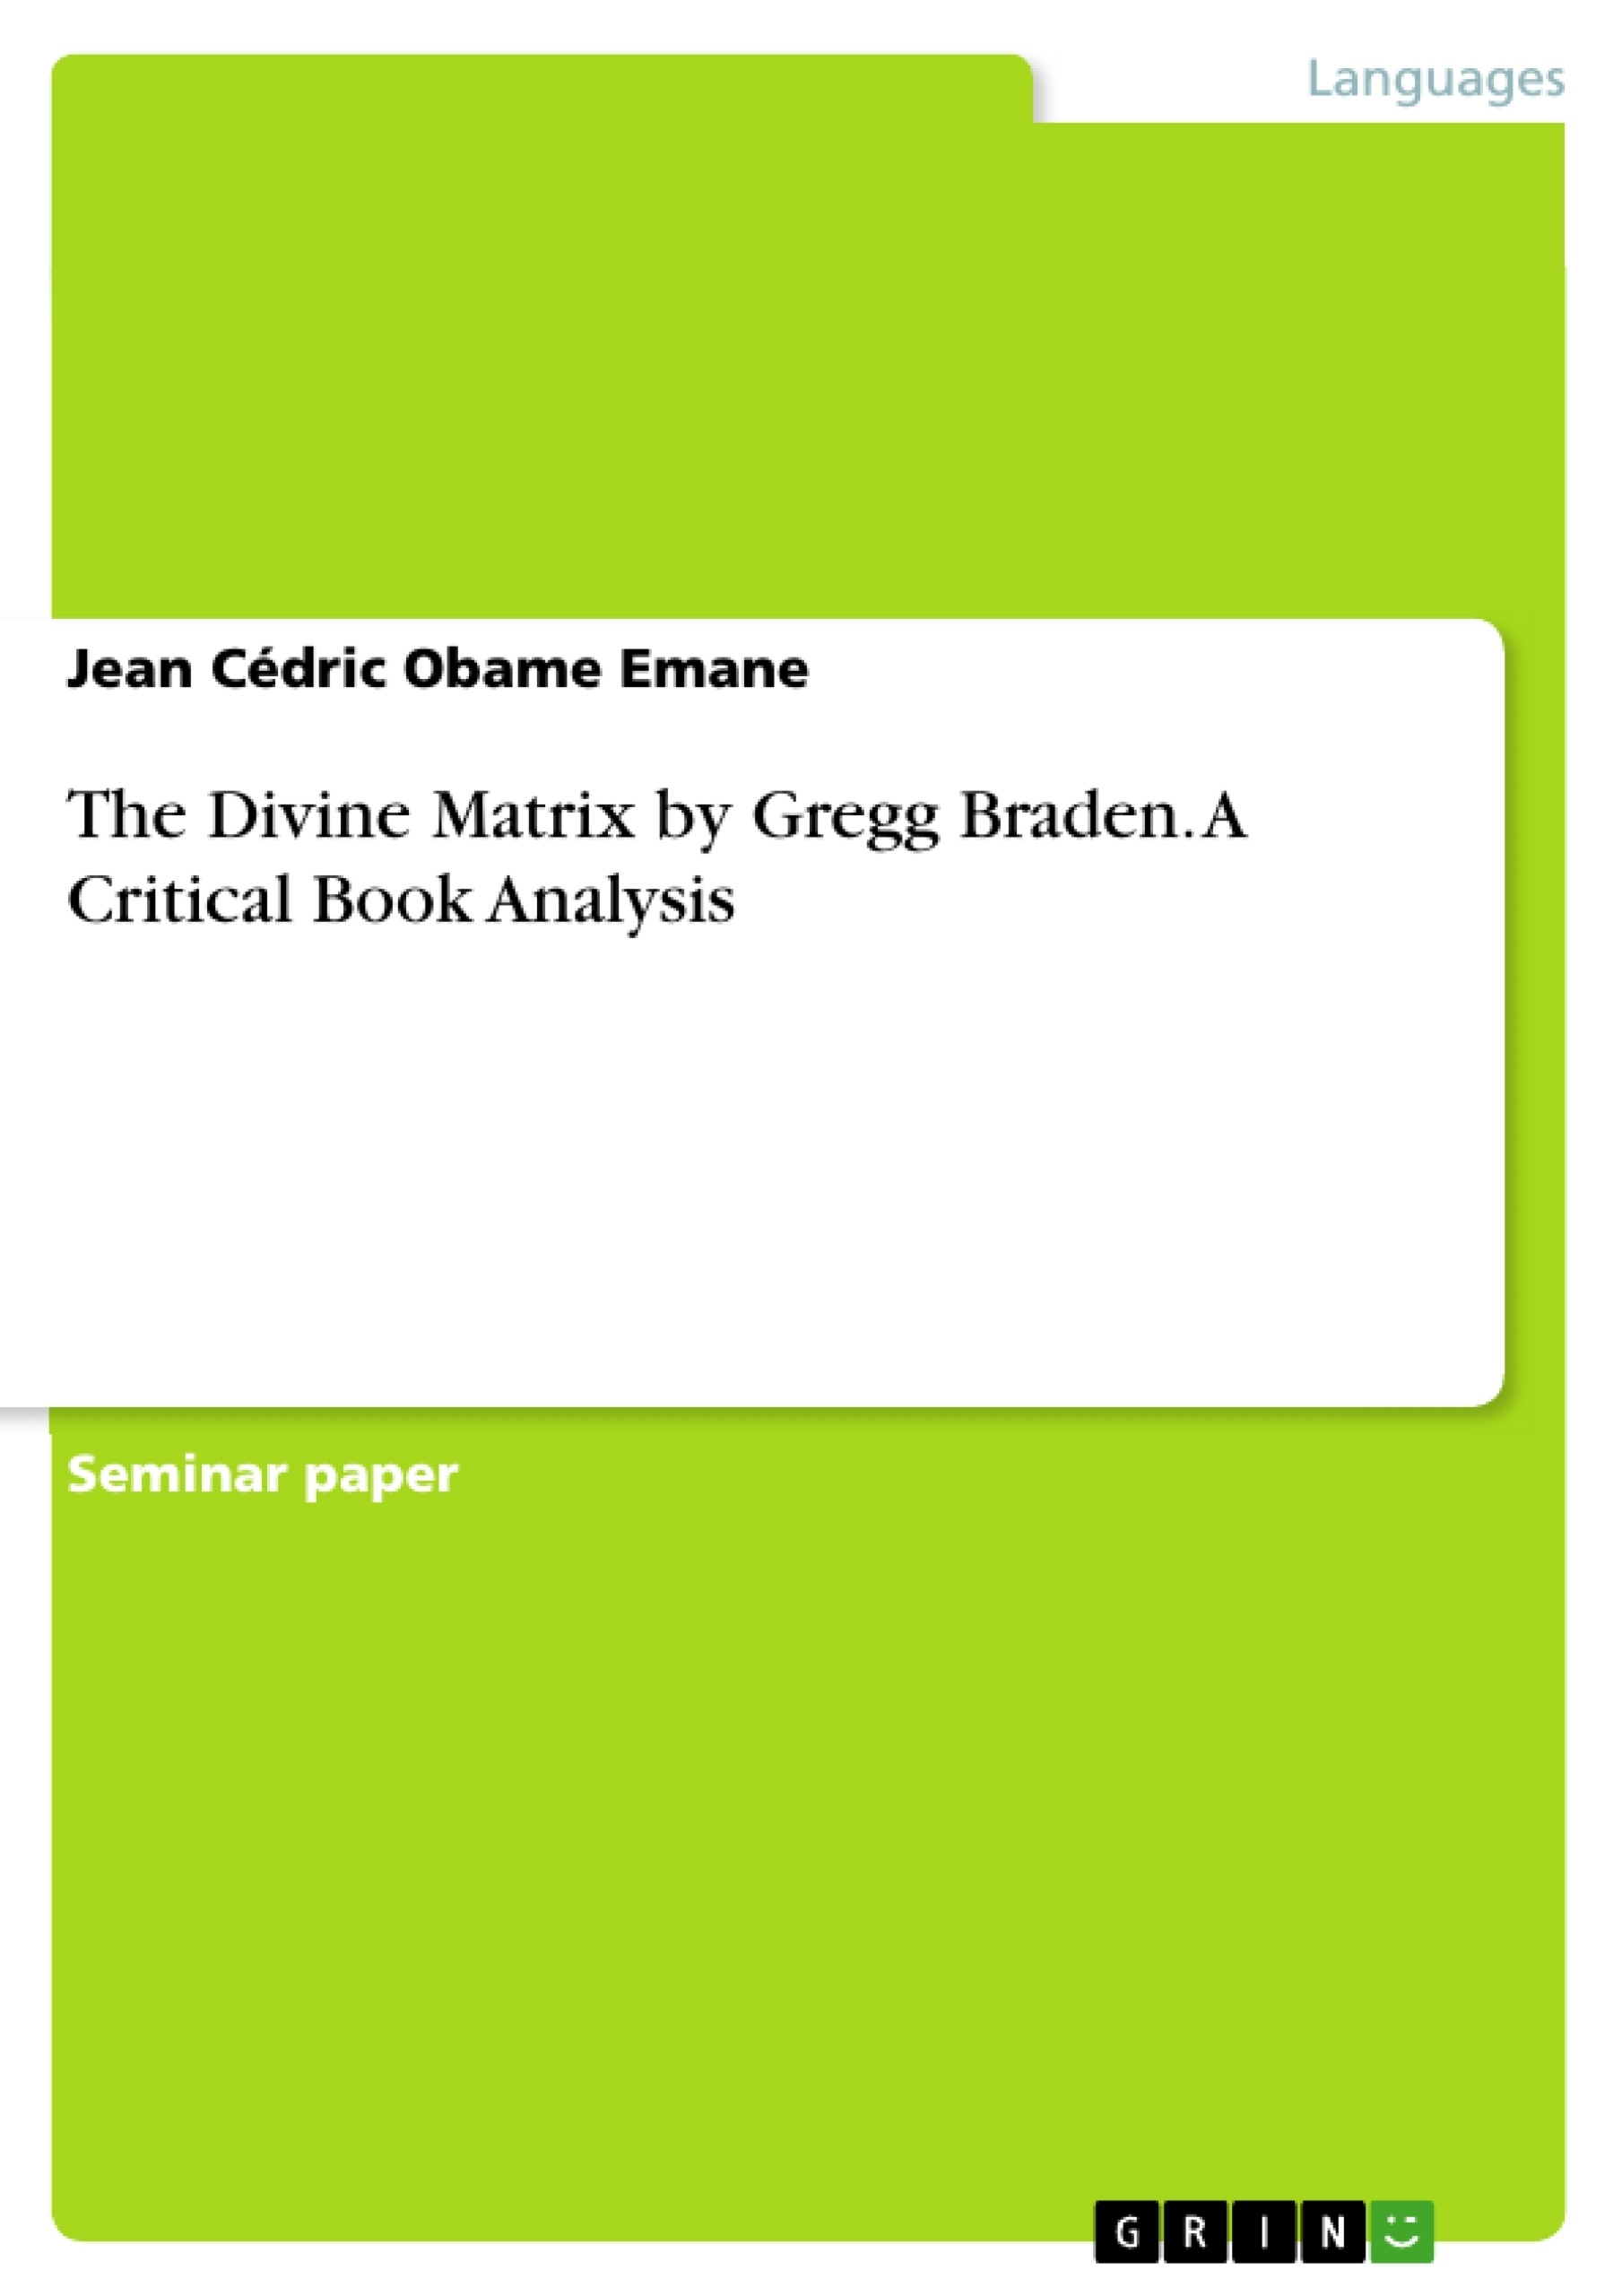 Title: The Divine Matrix by Gregg Braden. A Critical Book Analysis